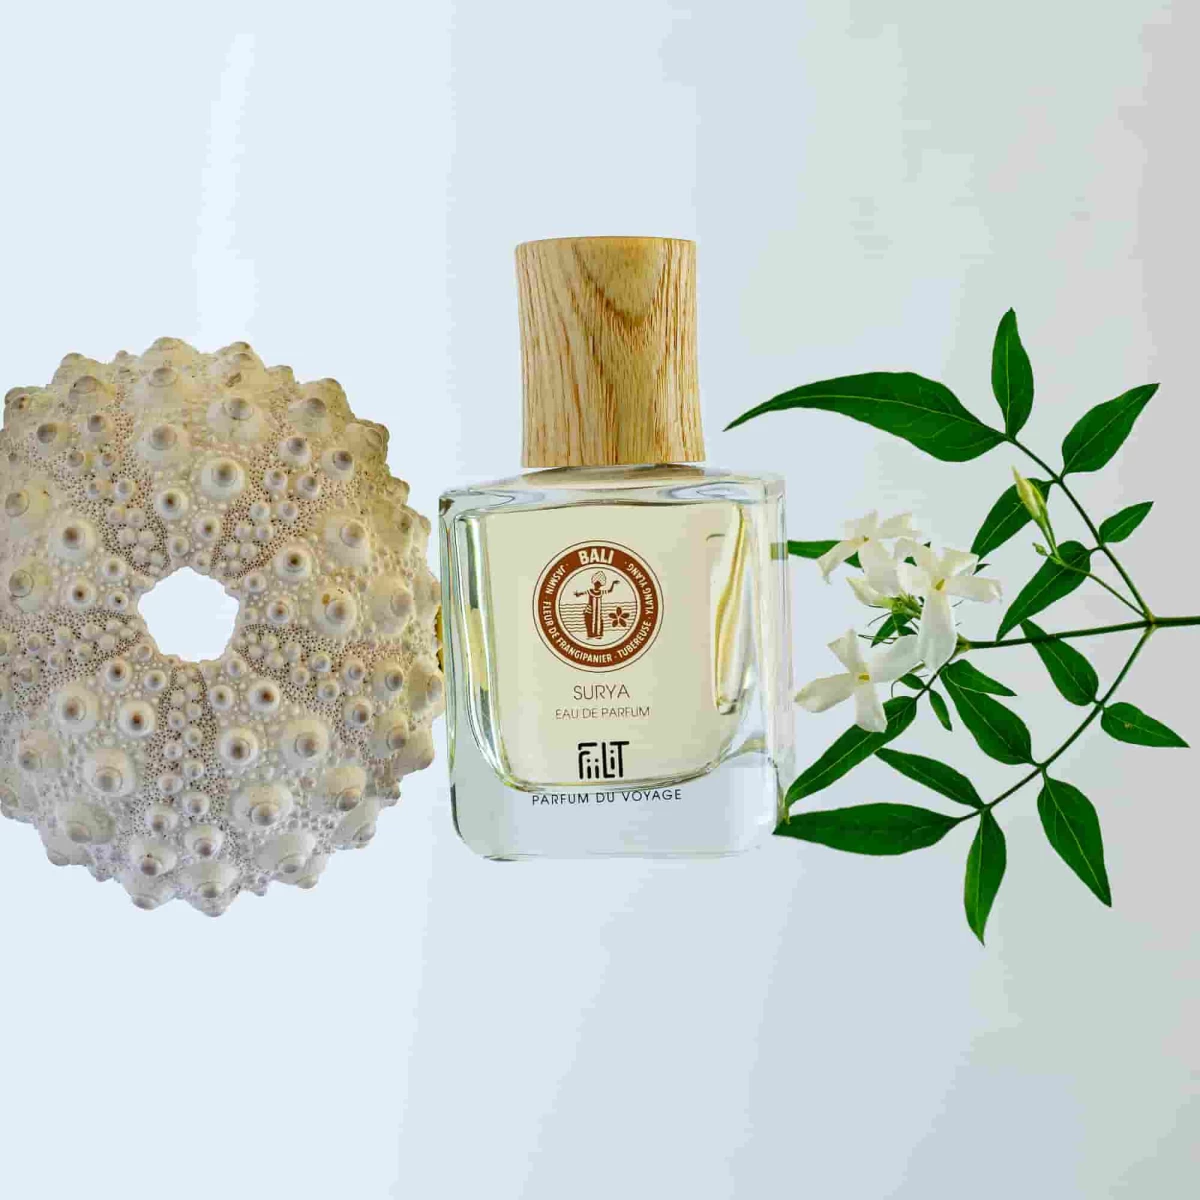 detailed_8_eau-de-parfum-surya-bali-50ml-fiilit-parfum-du-voyage1.webp